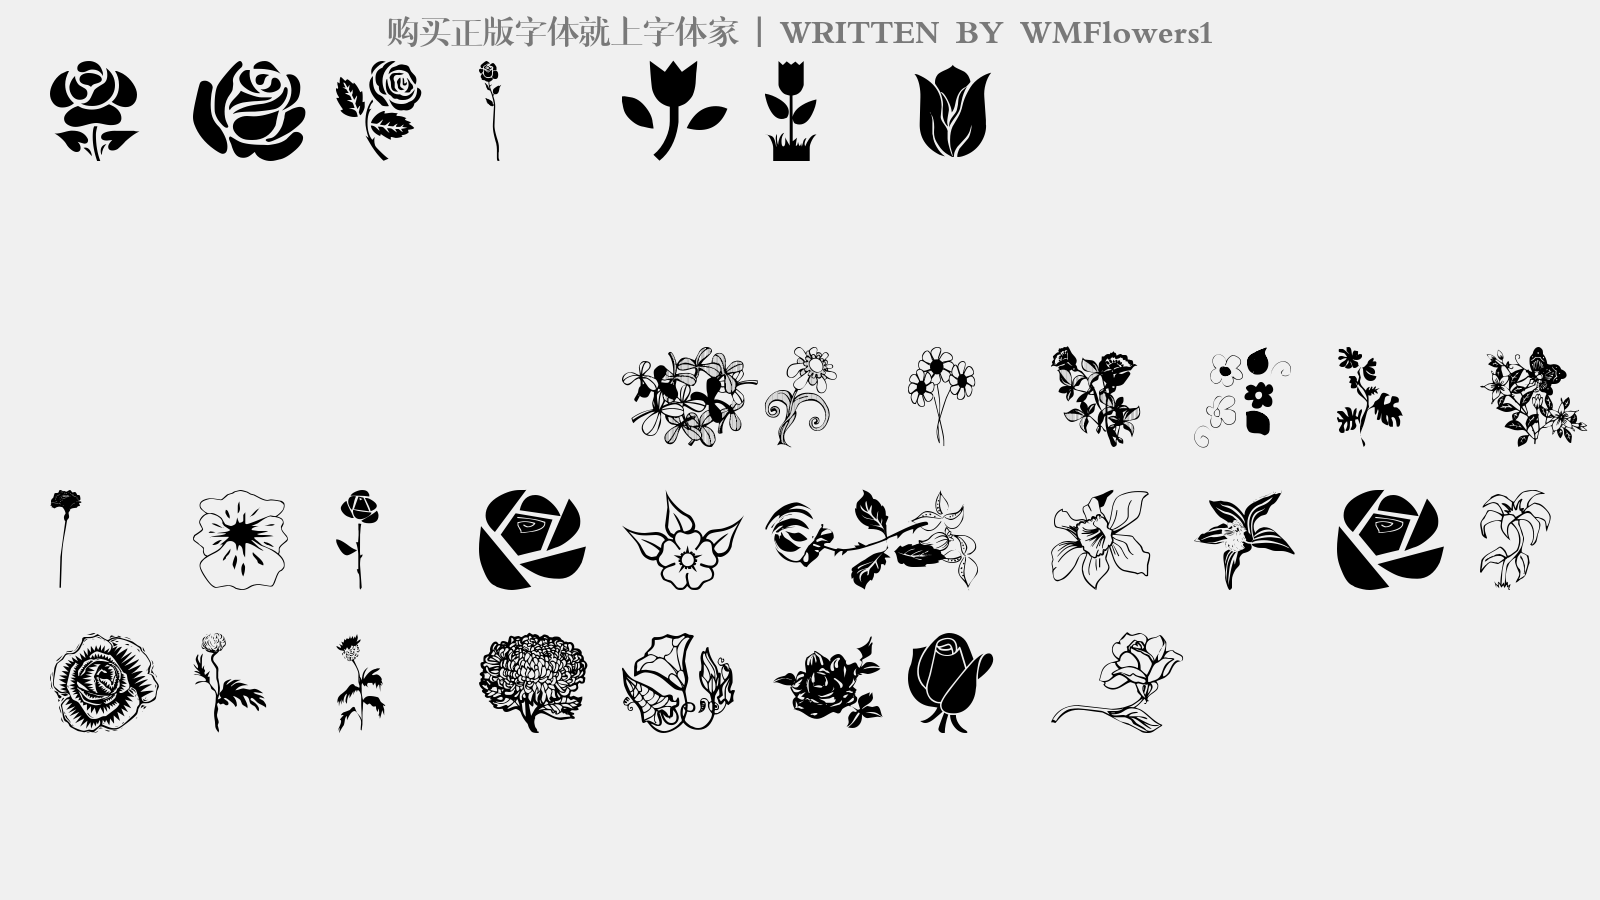 WMFlowers1 - 大写字母/小写字母/数字